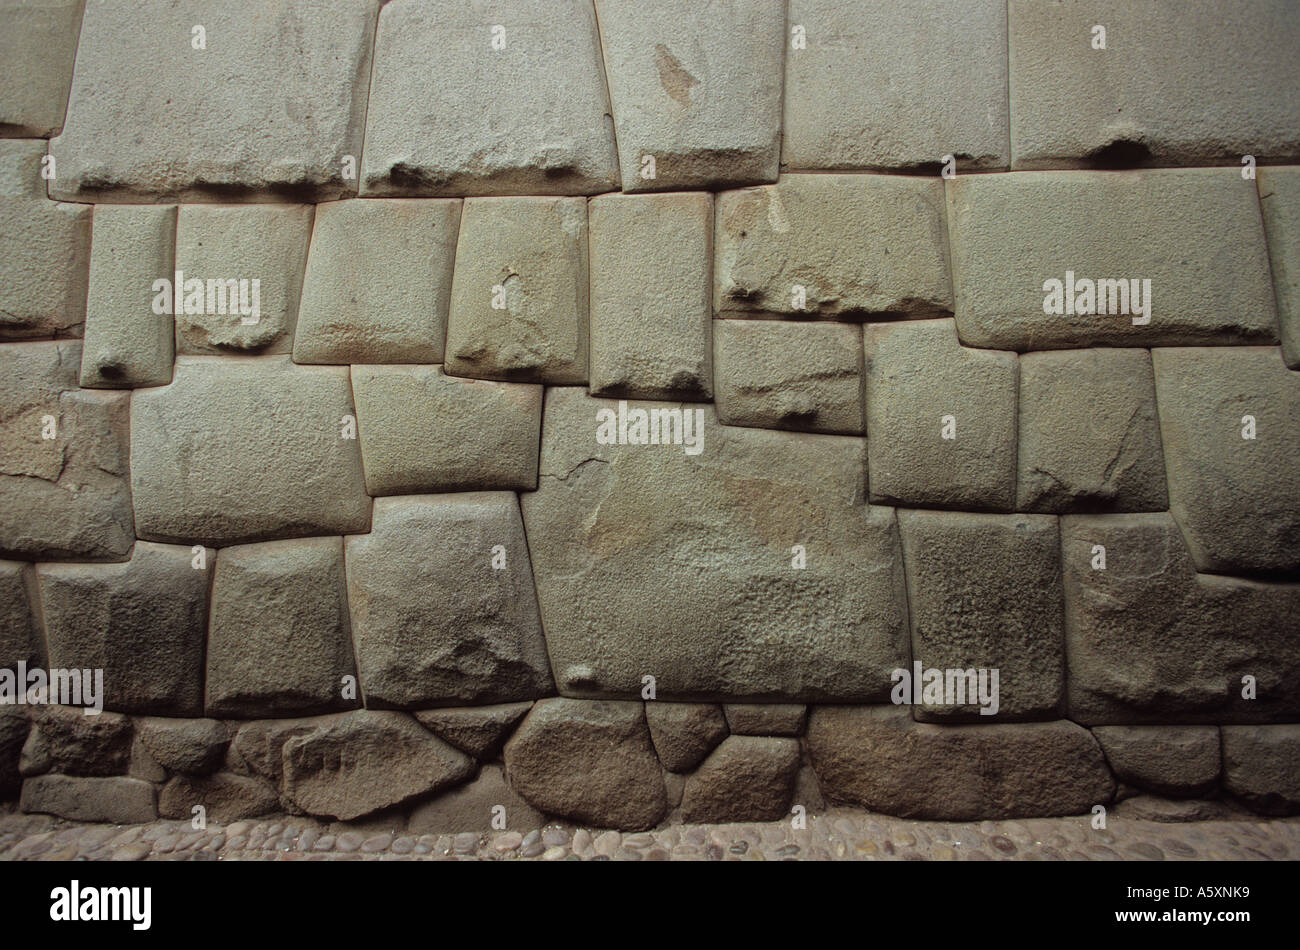 Inca parete in pietra con le sue dodici facciata pietra (Perù). Mur de pierres inca contenant la fameuse pierre à douze angoli (Pérou) Foto Stock